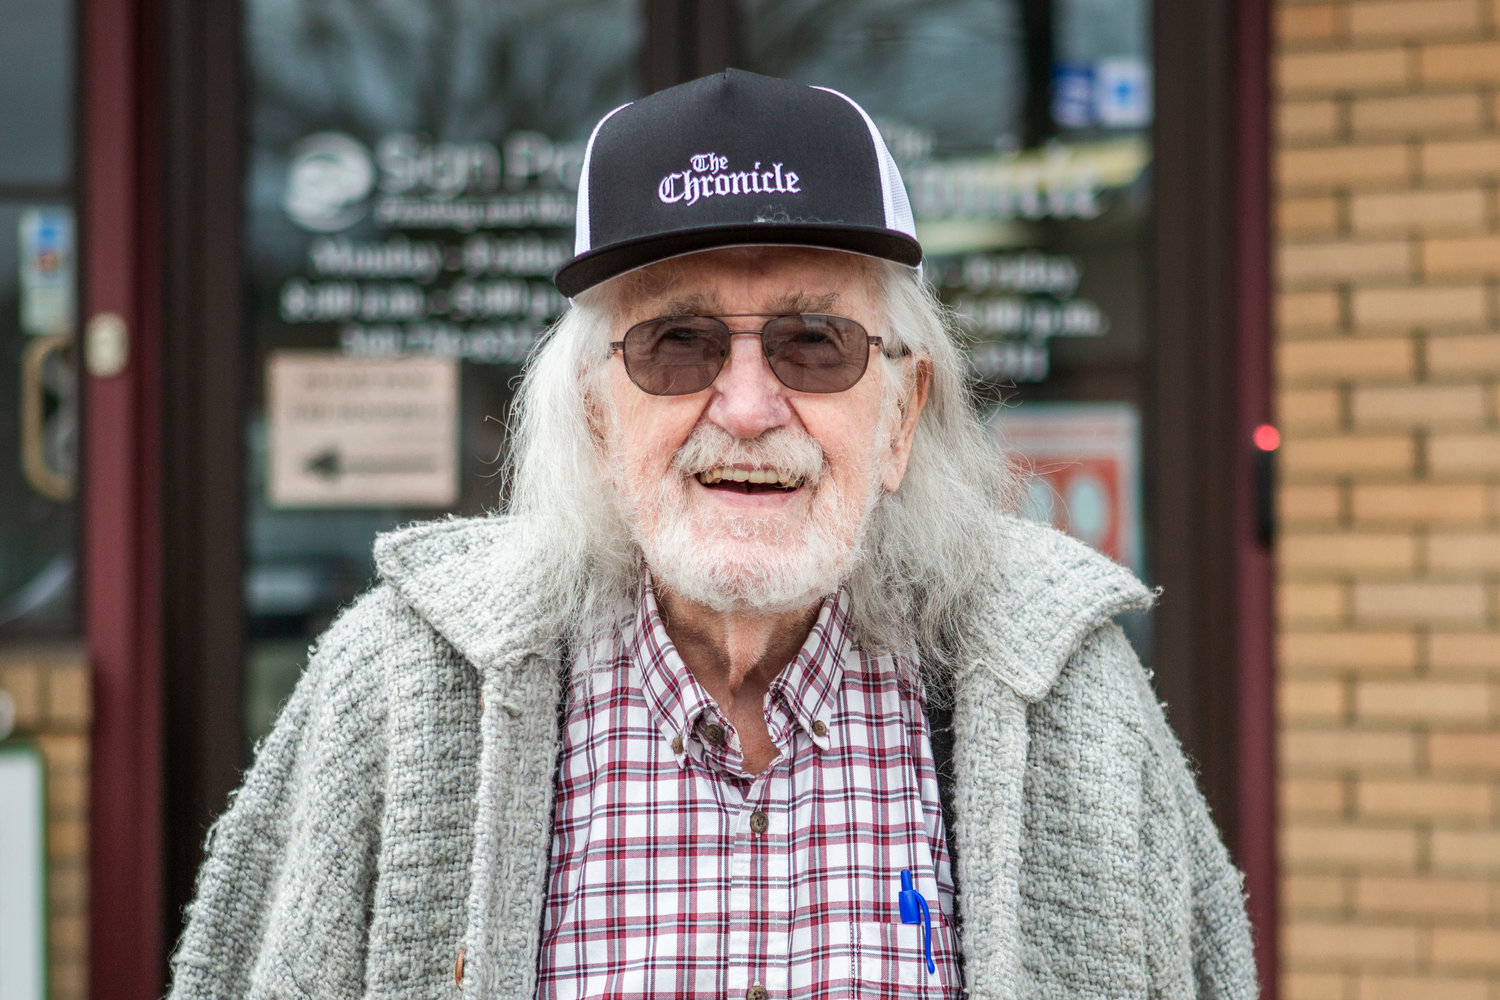 Bill Moeller smiles for a portrait outside The Chronicle in Centralia on Jan. 24, 2023.